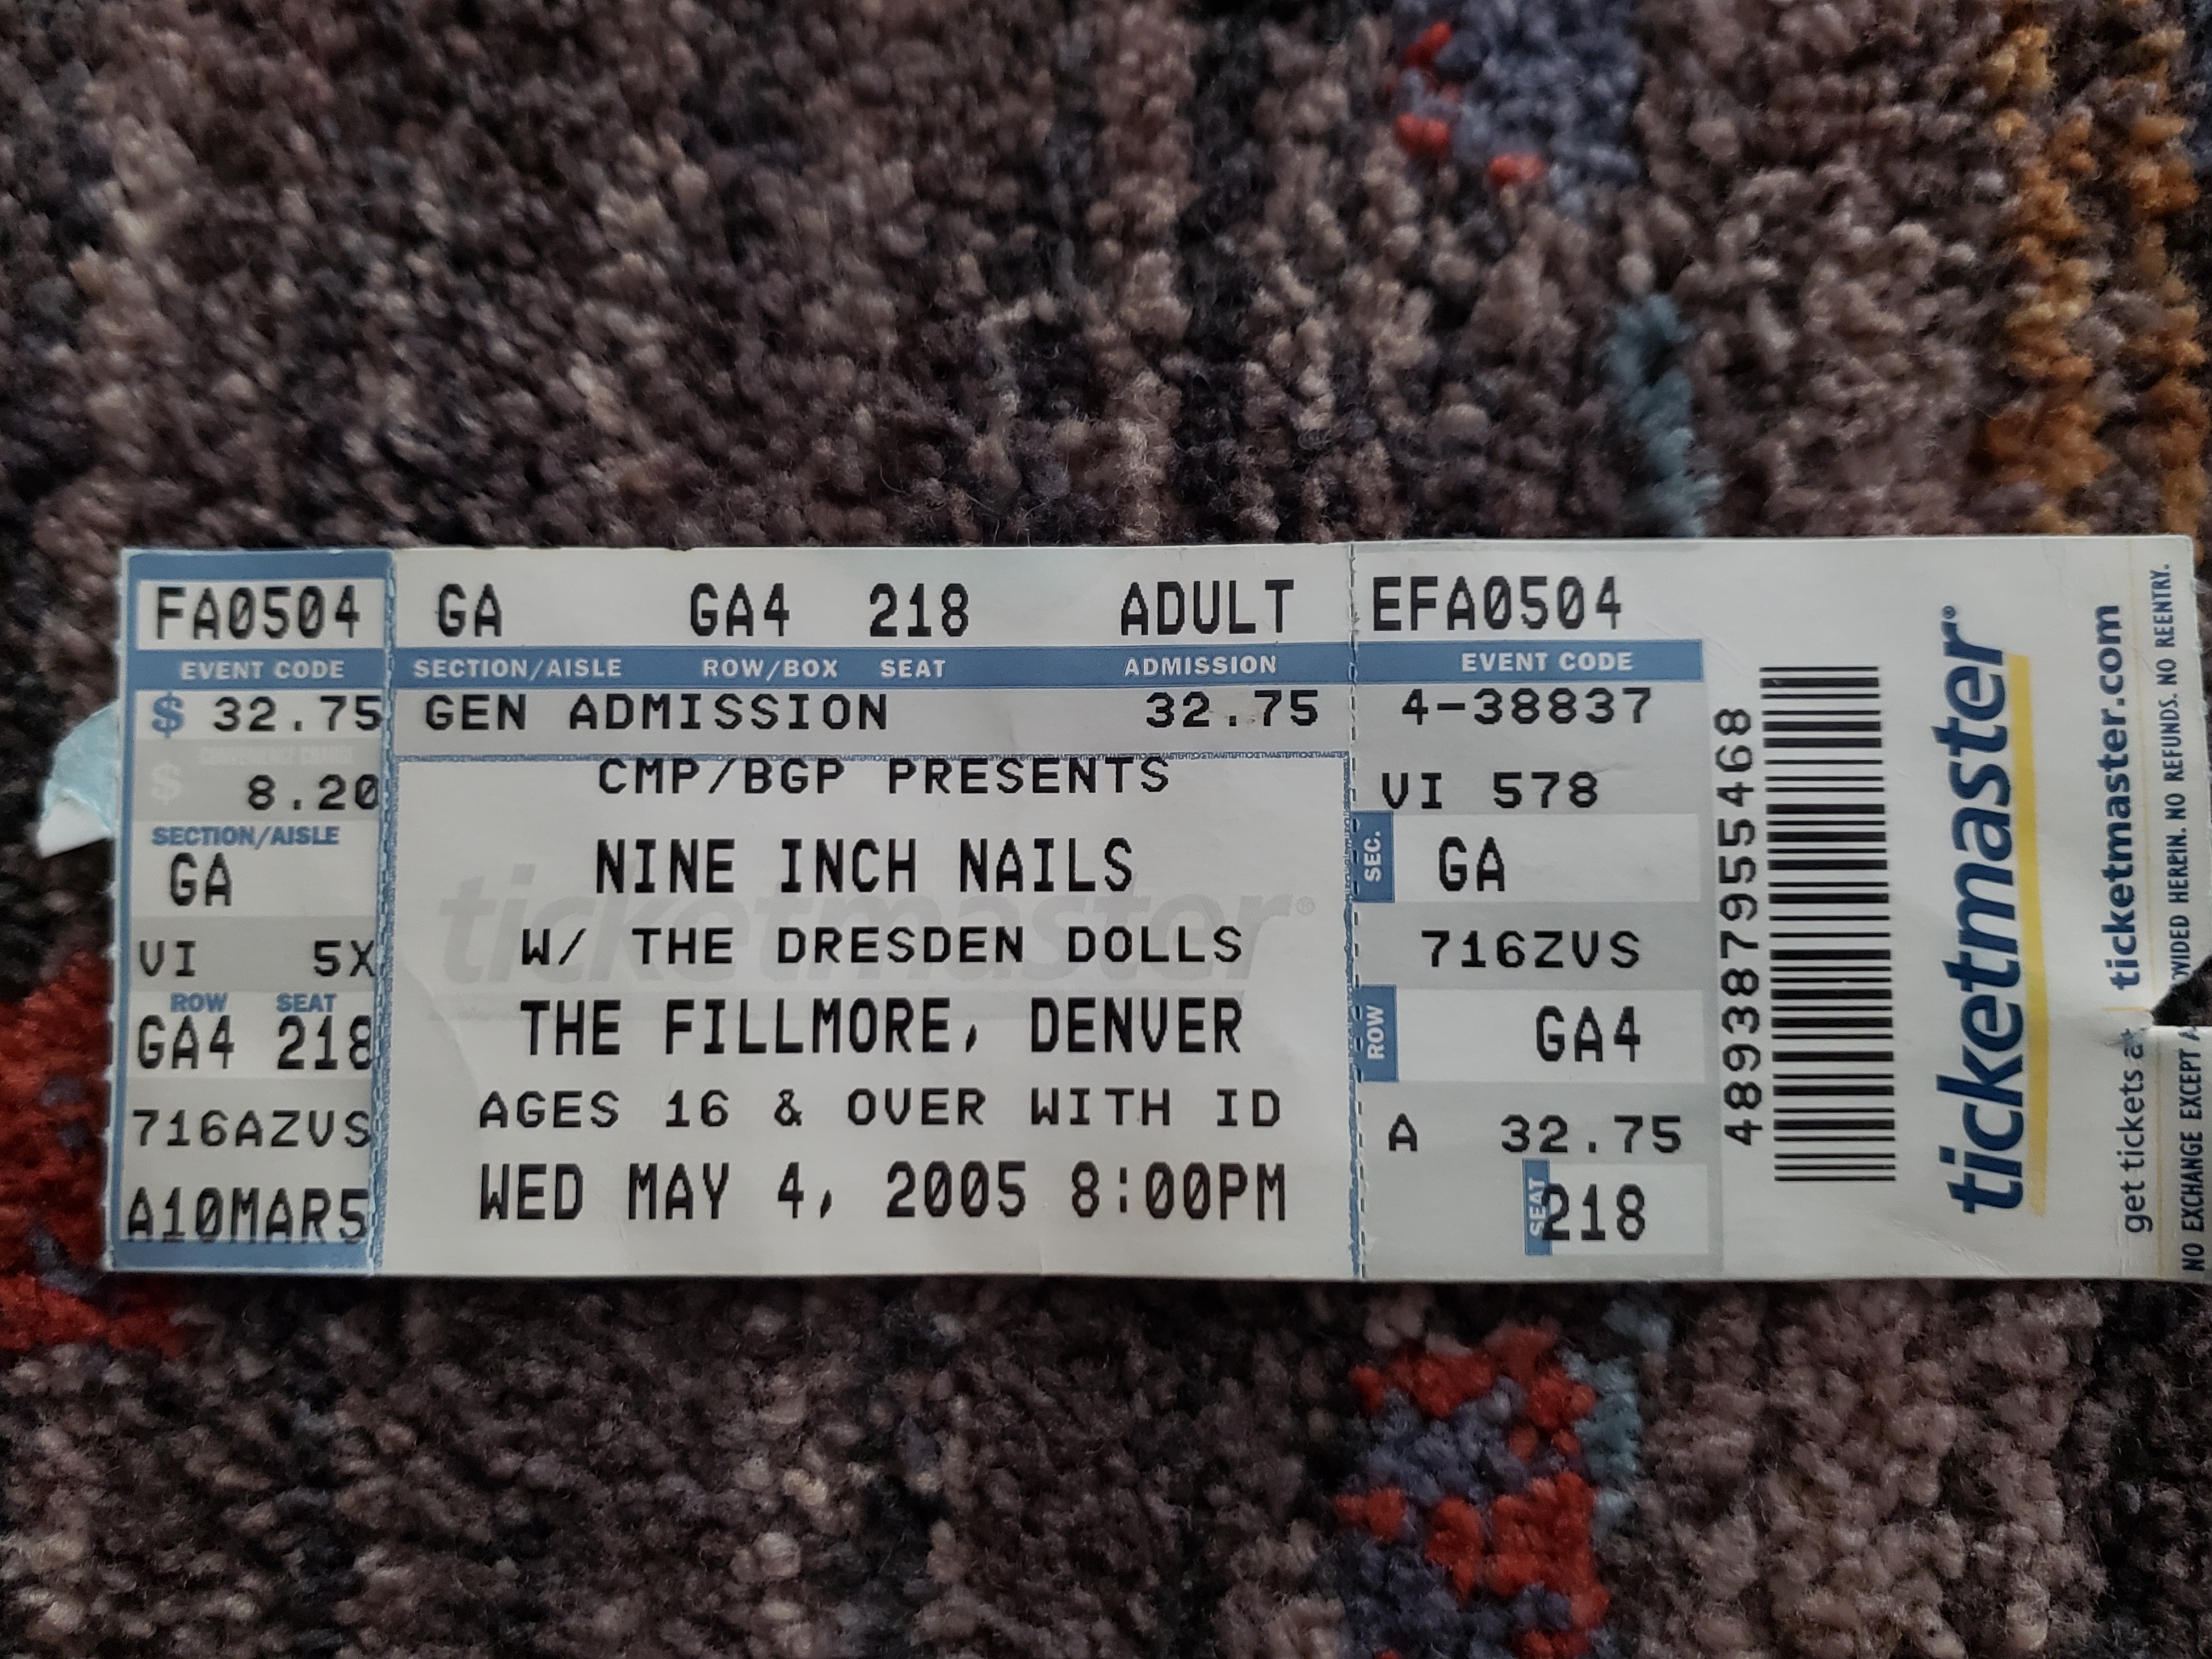 2005/05/04 Ticket